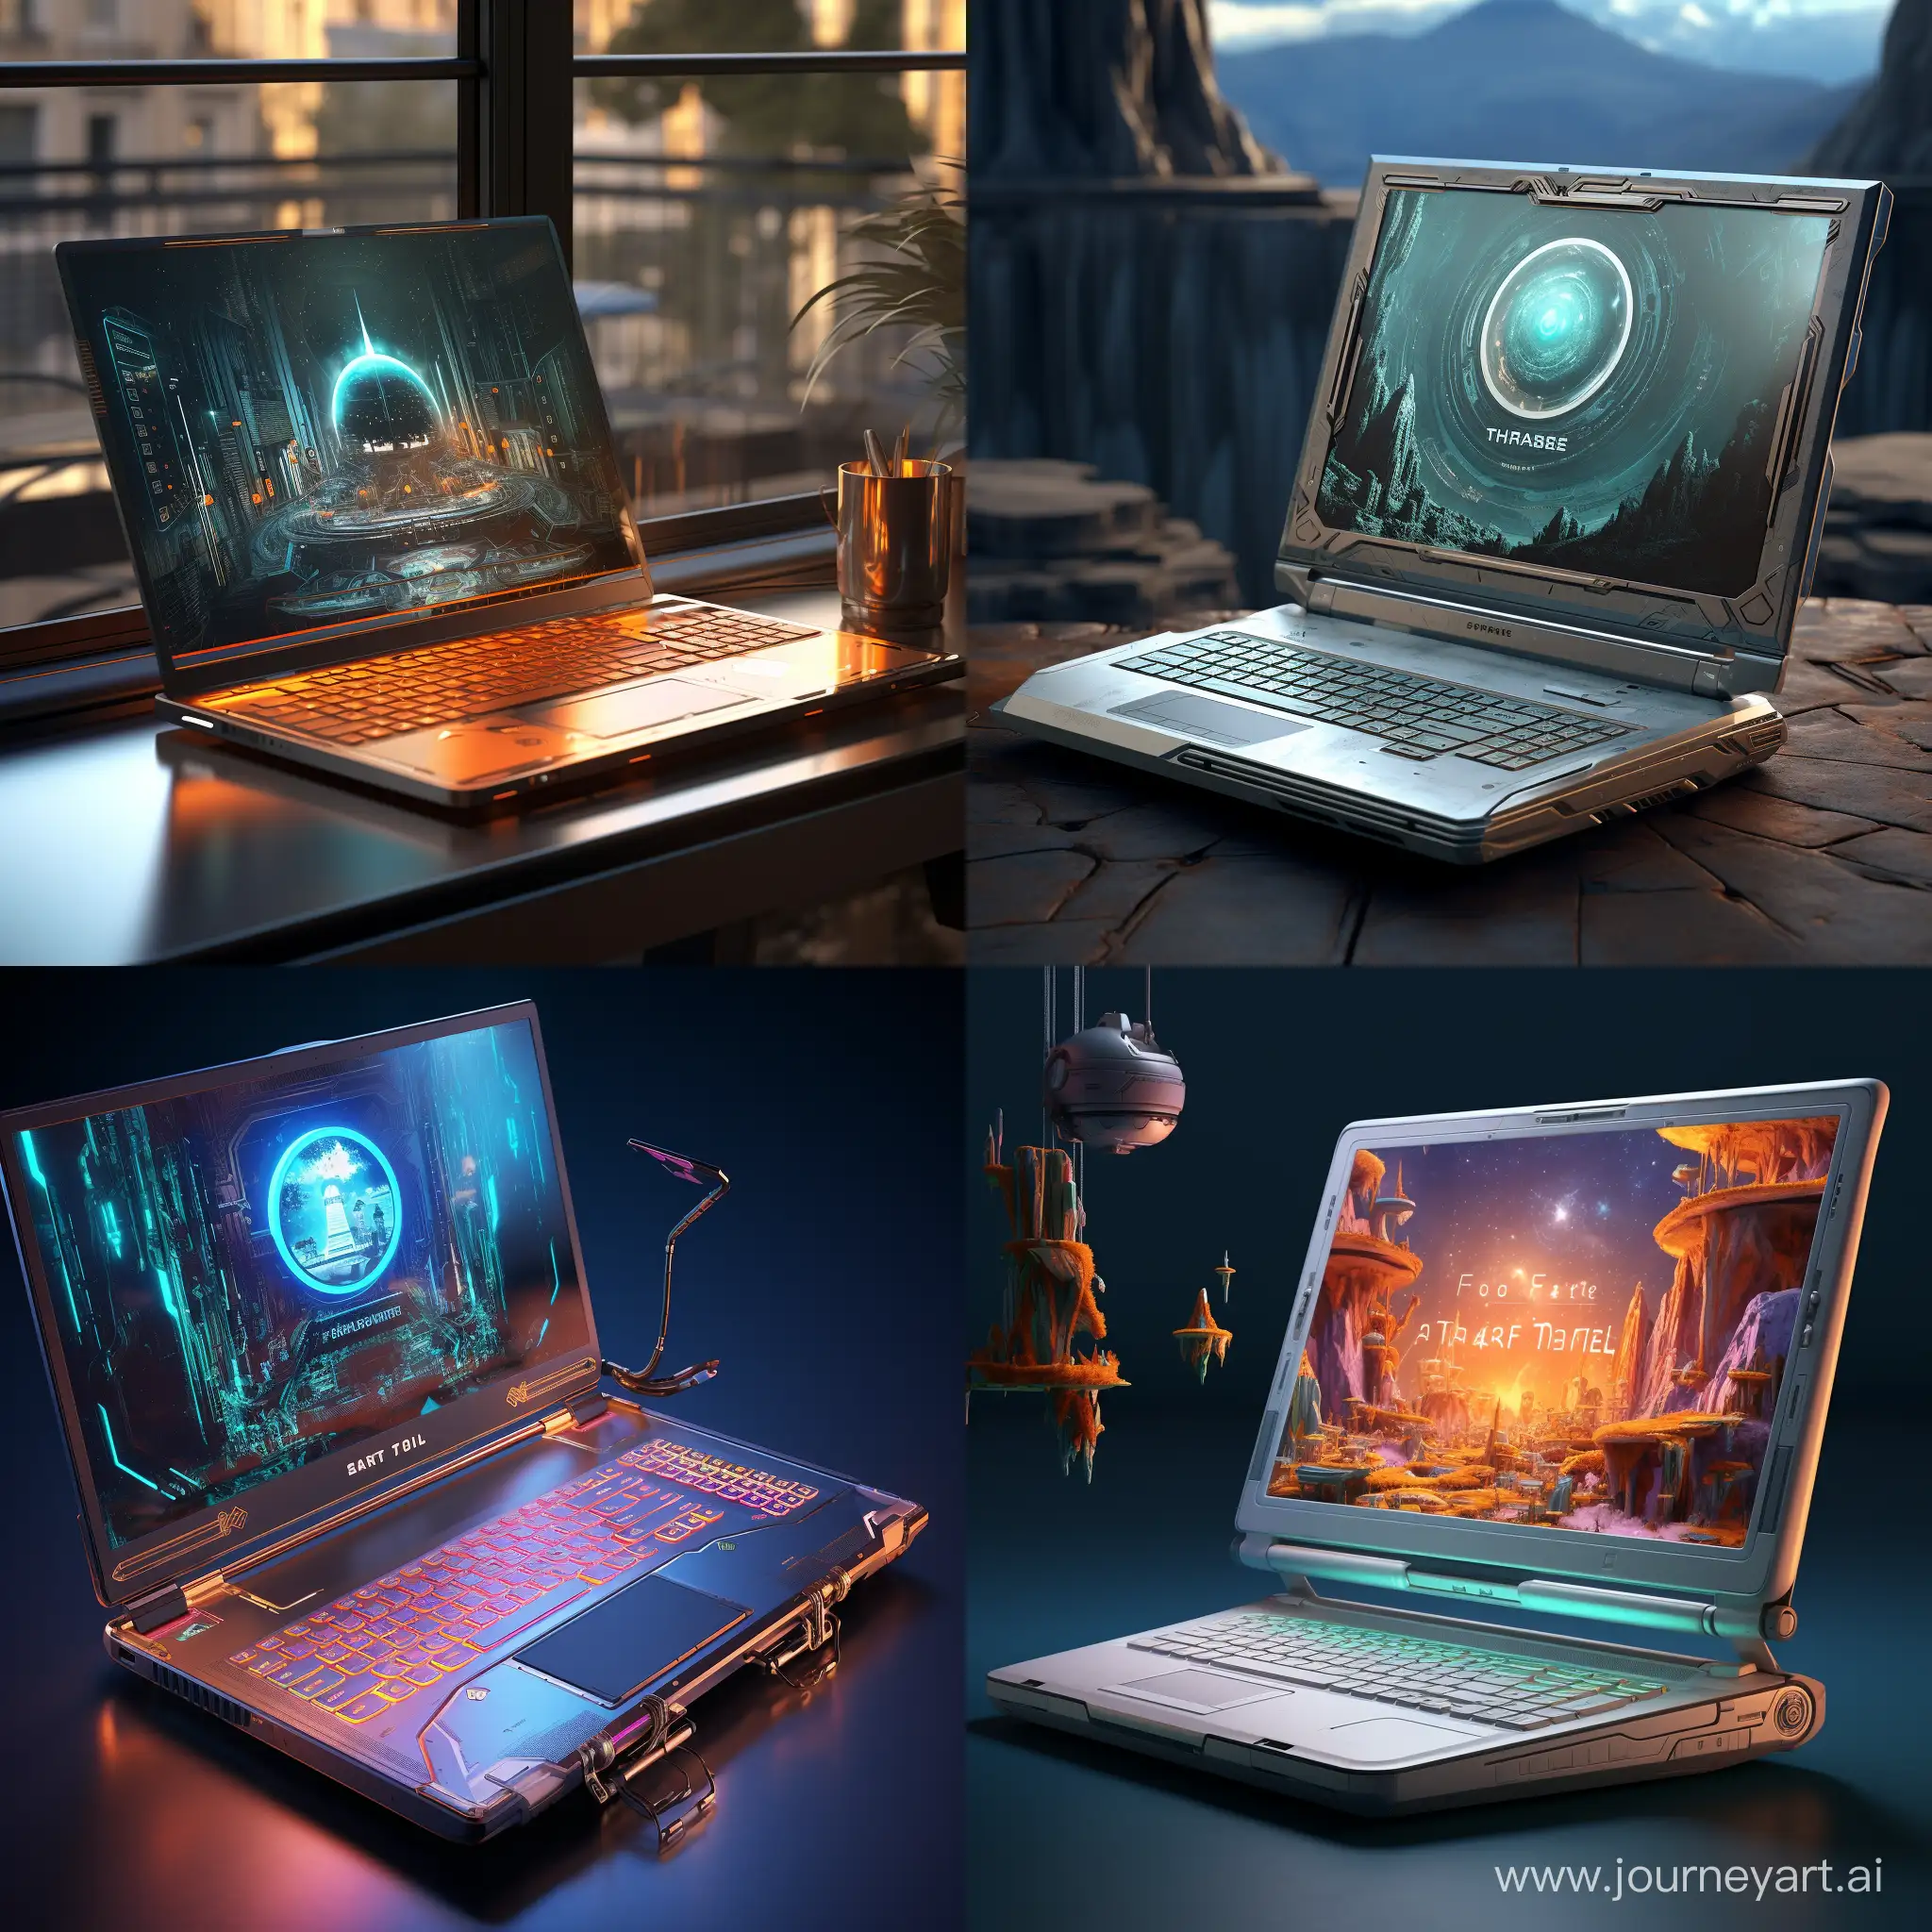 Futuristic-SciFi-Laptop-in-a-FarFuture-Setting